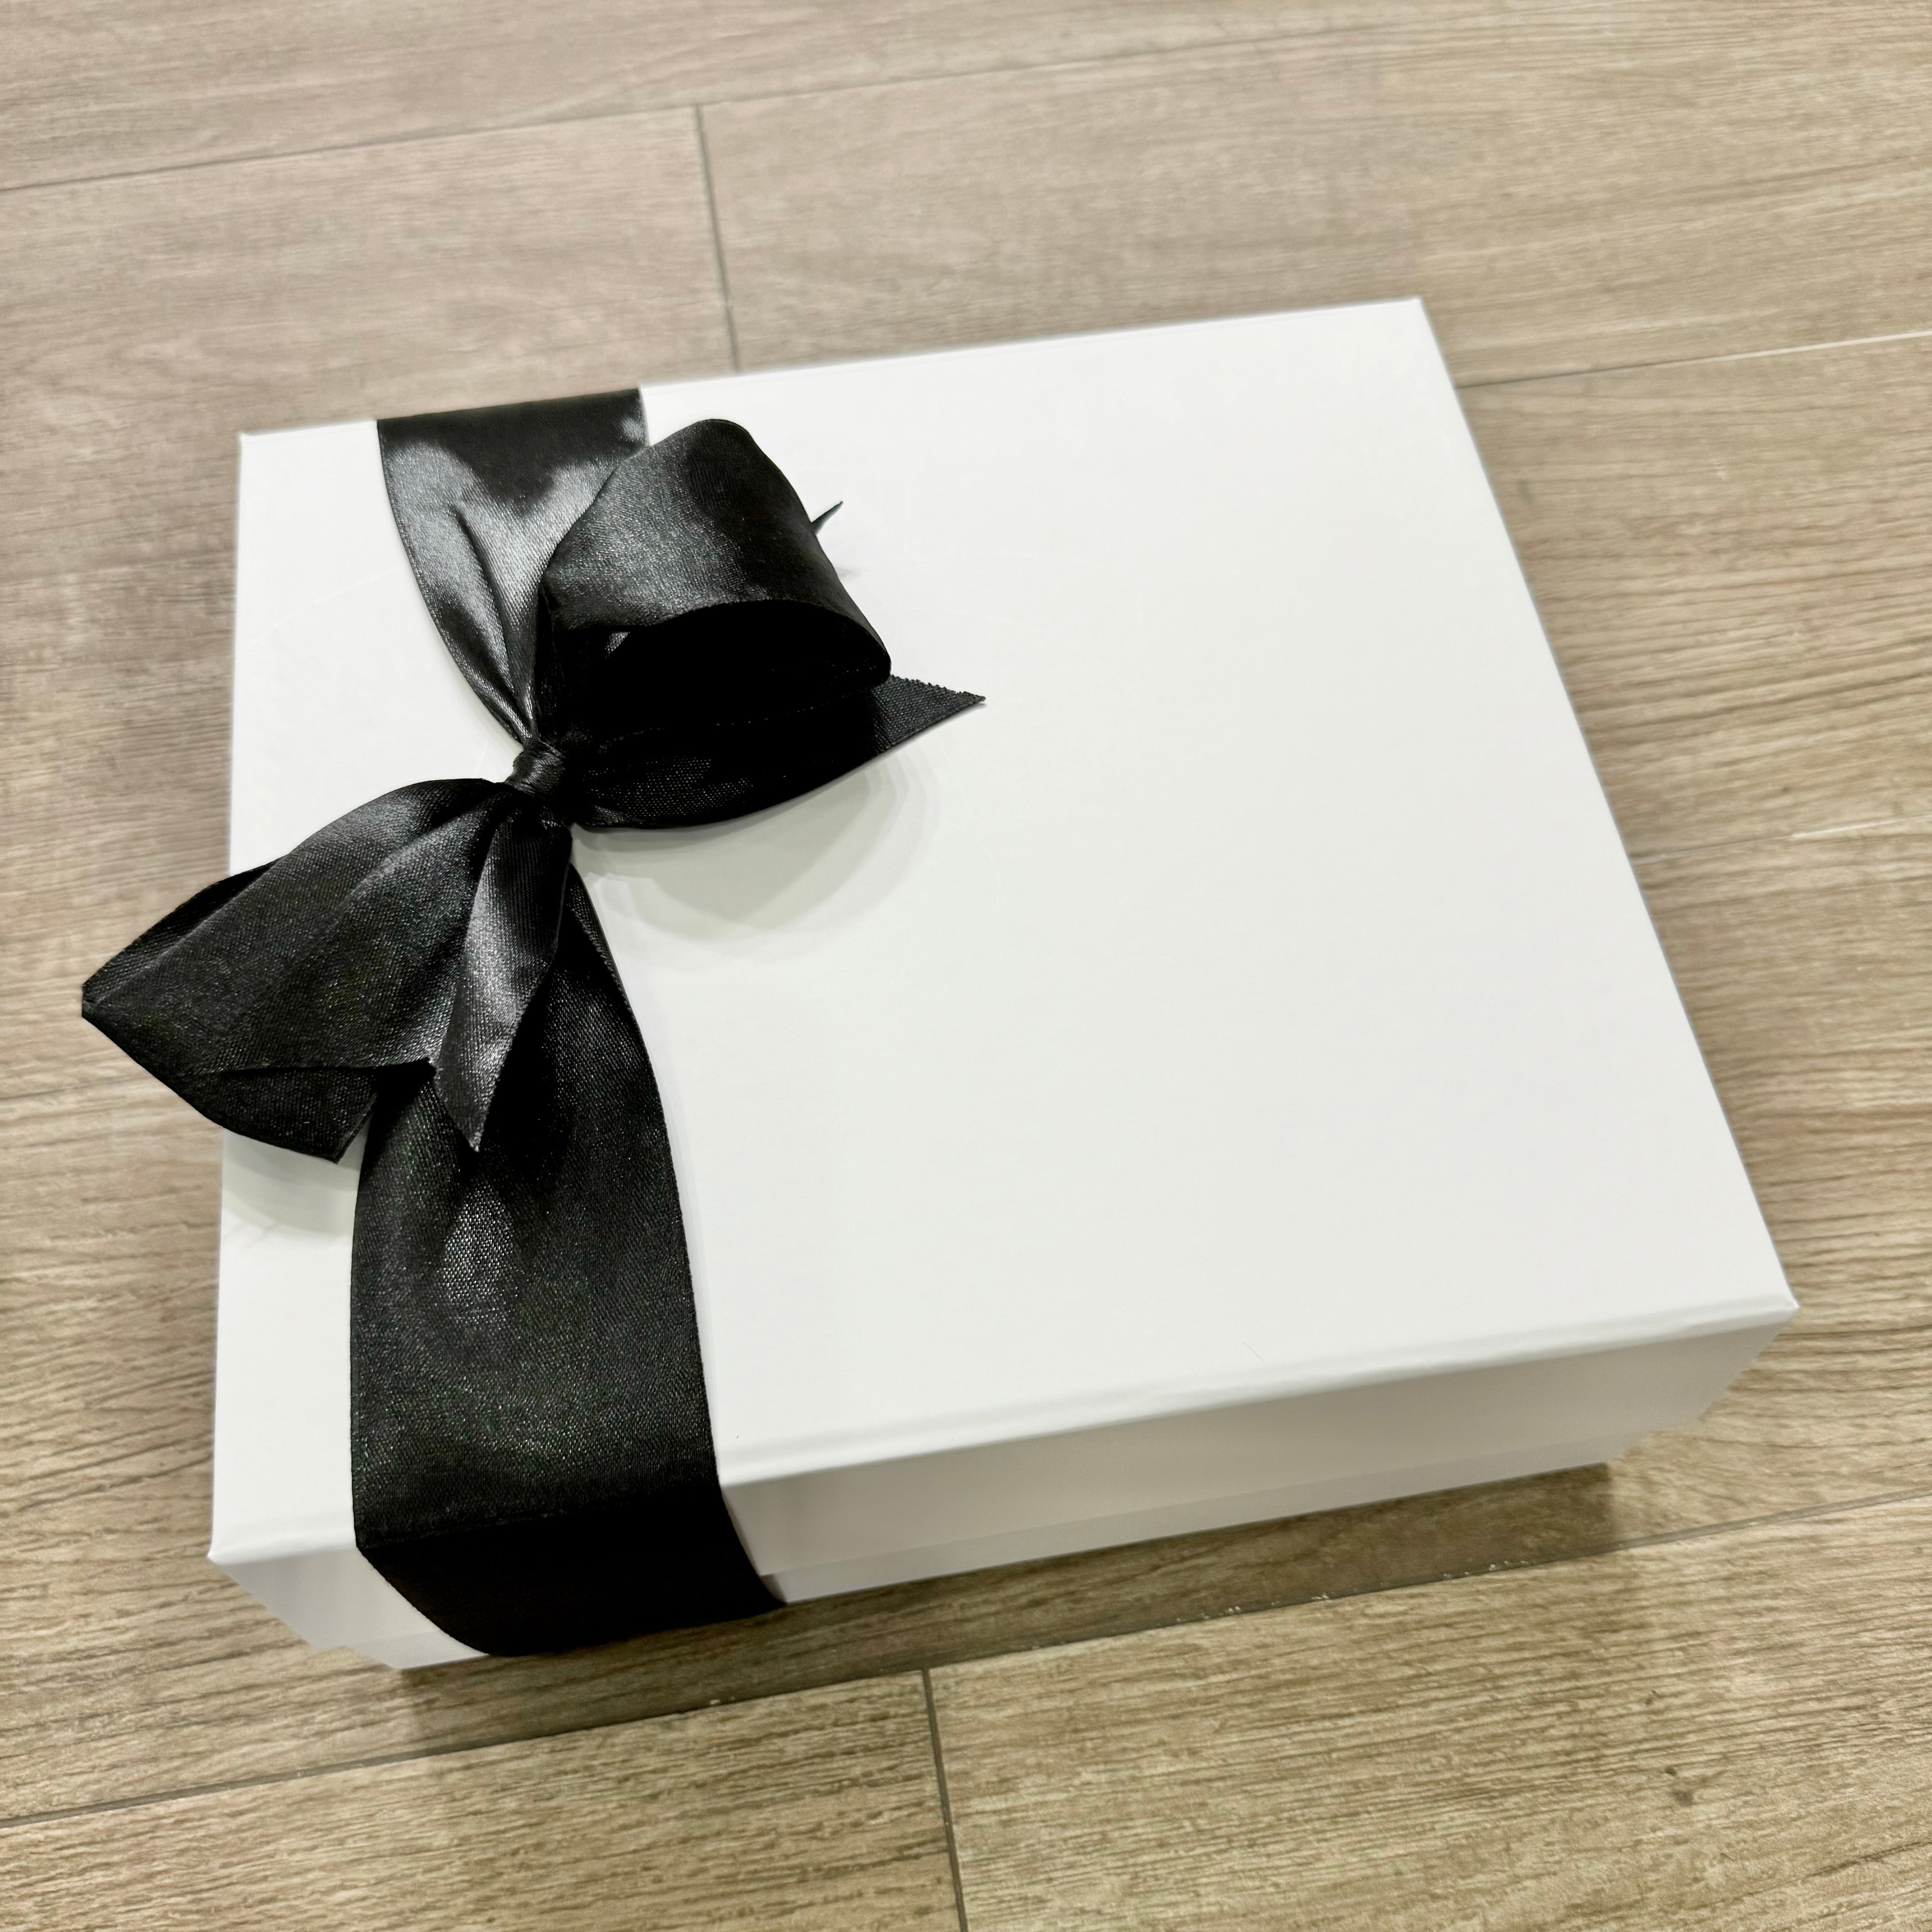 New Personalized “Signature Gift Box”